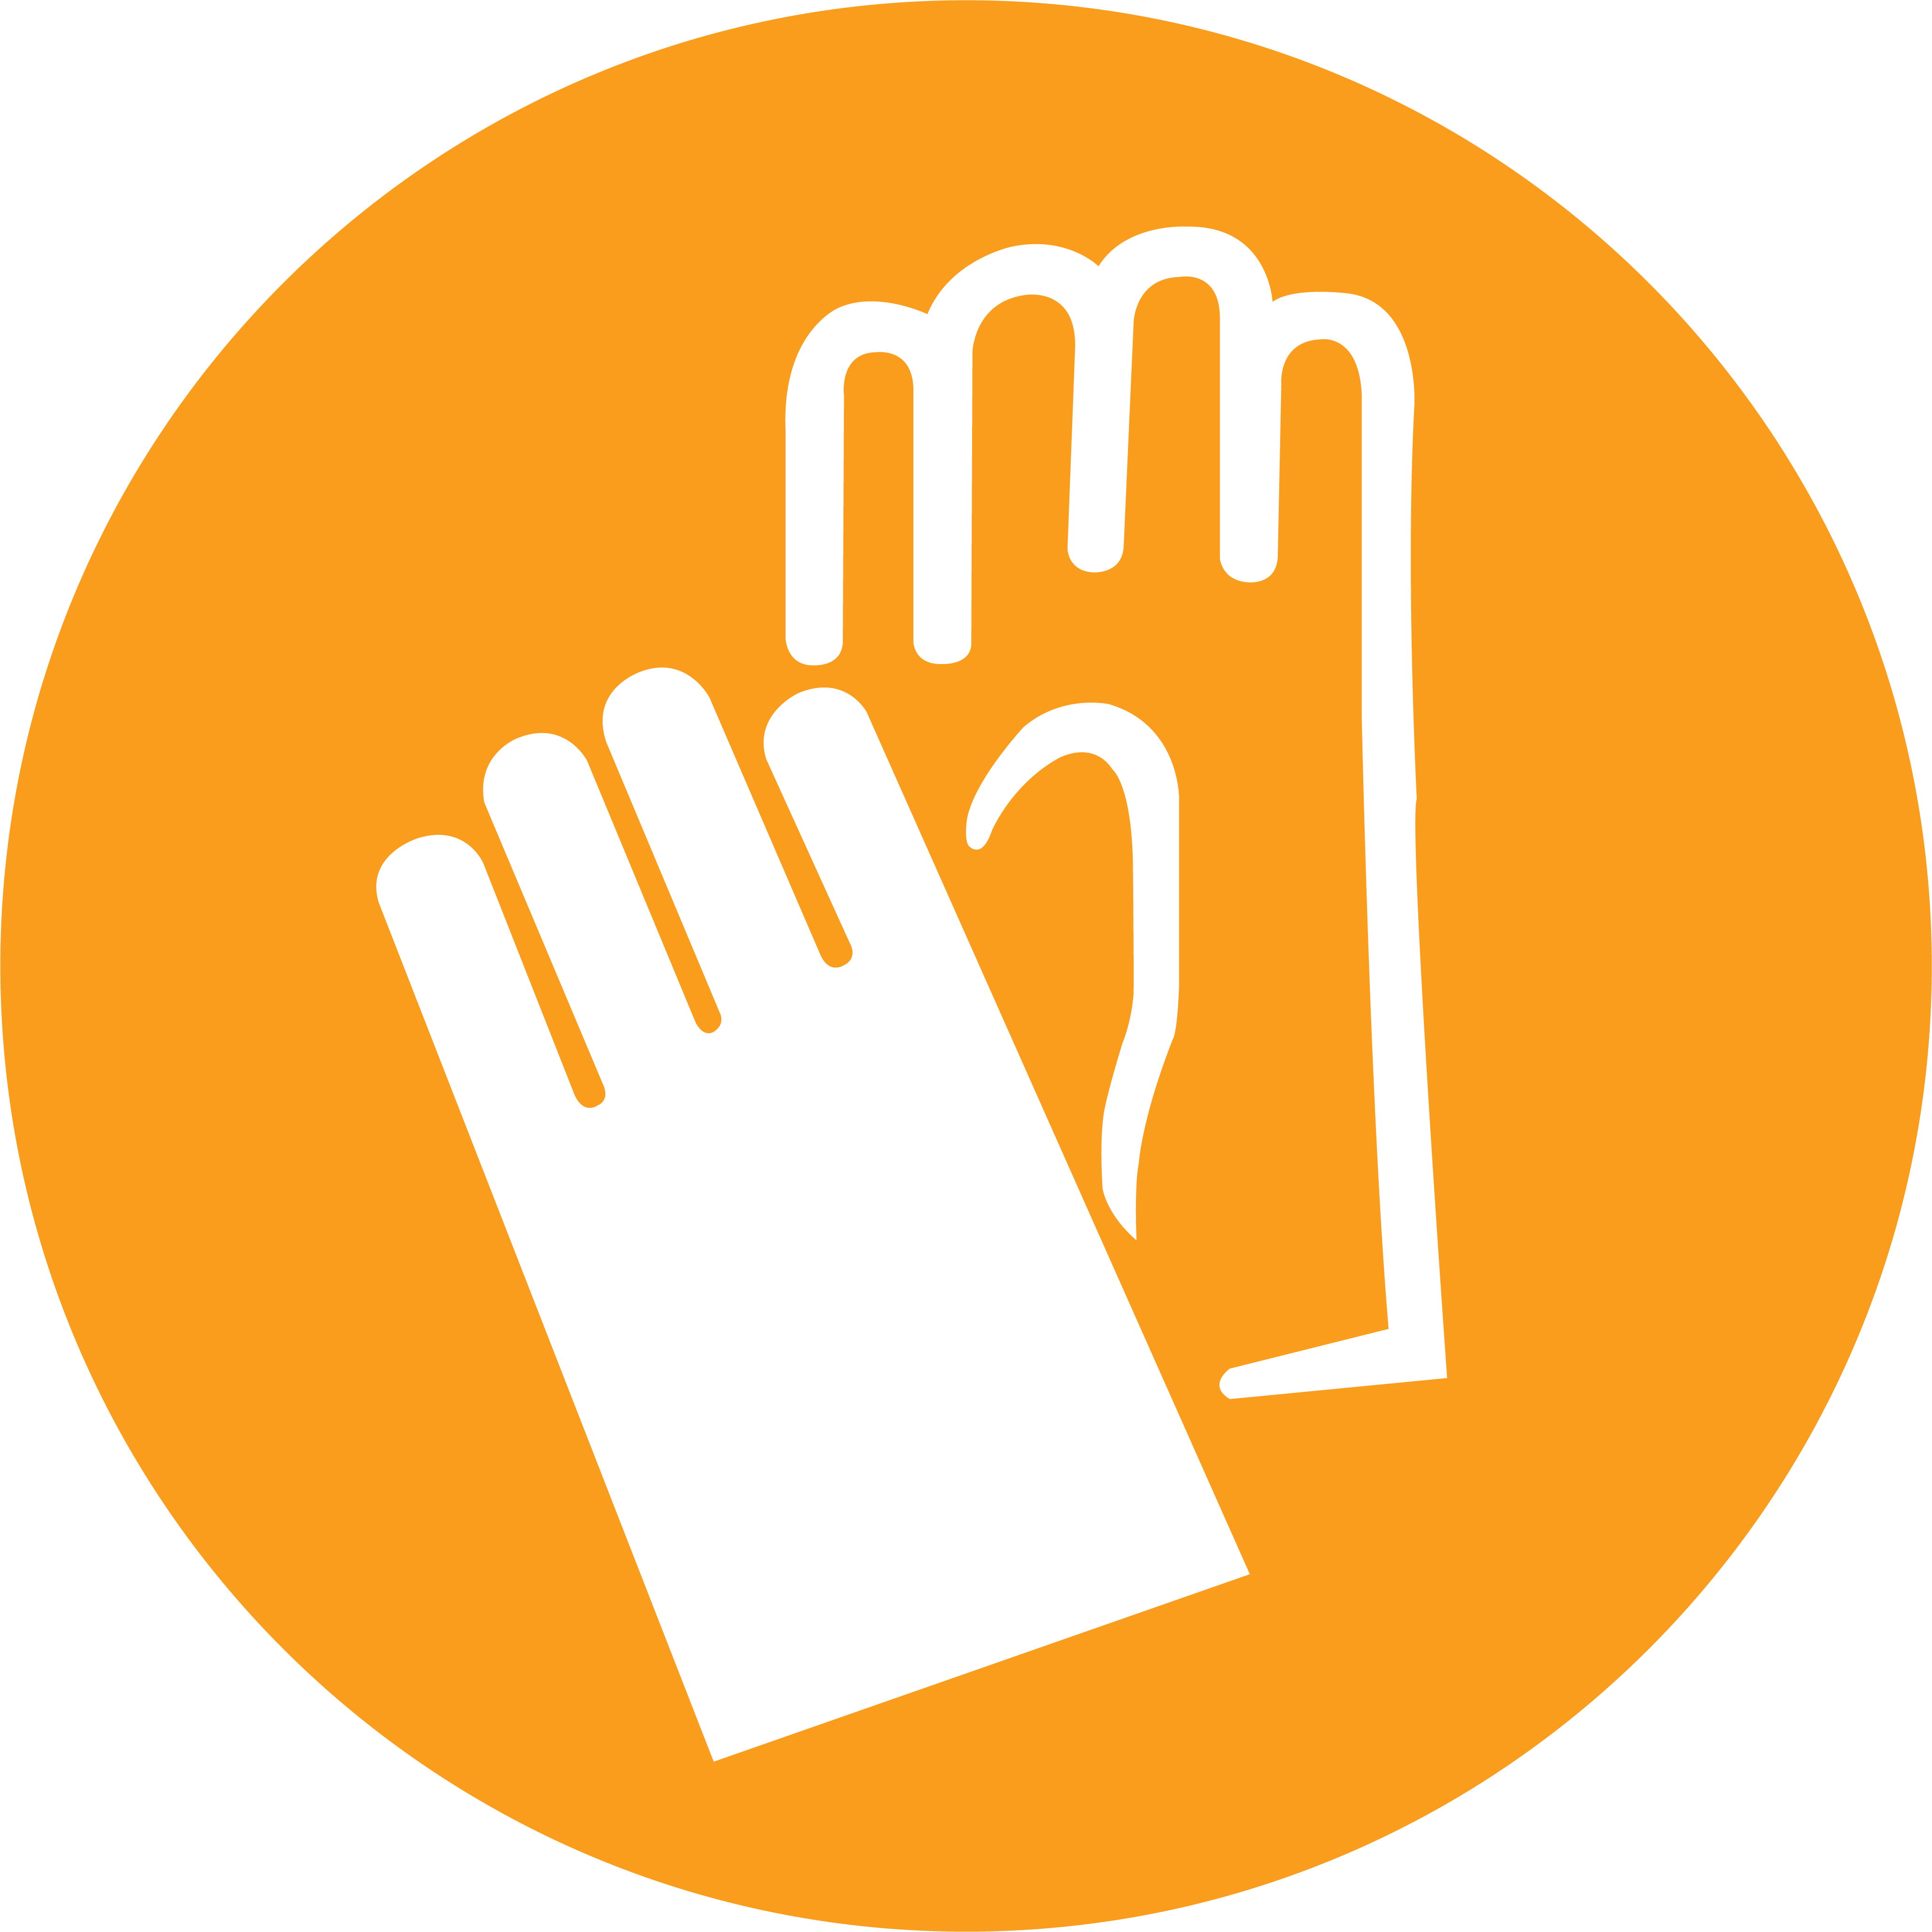 gloves icon